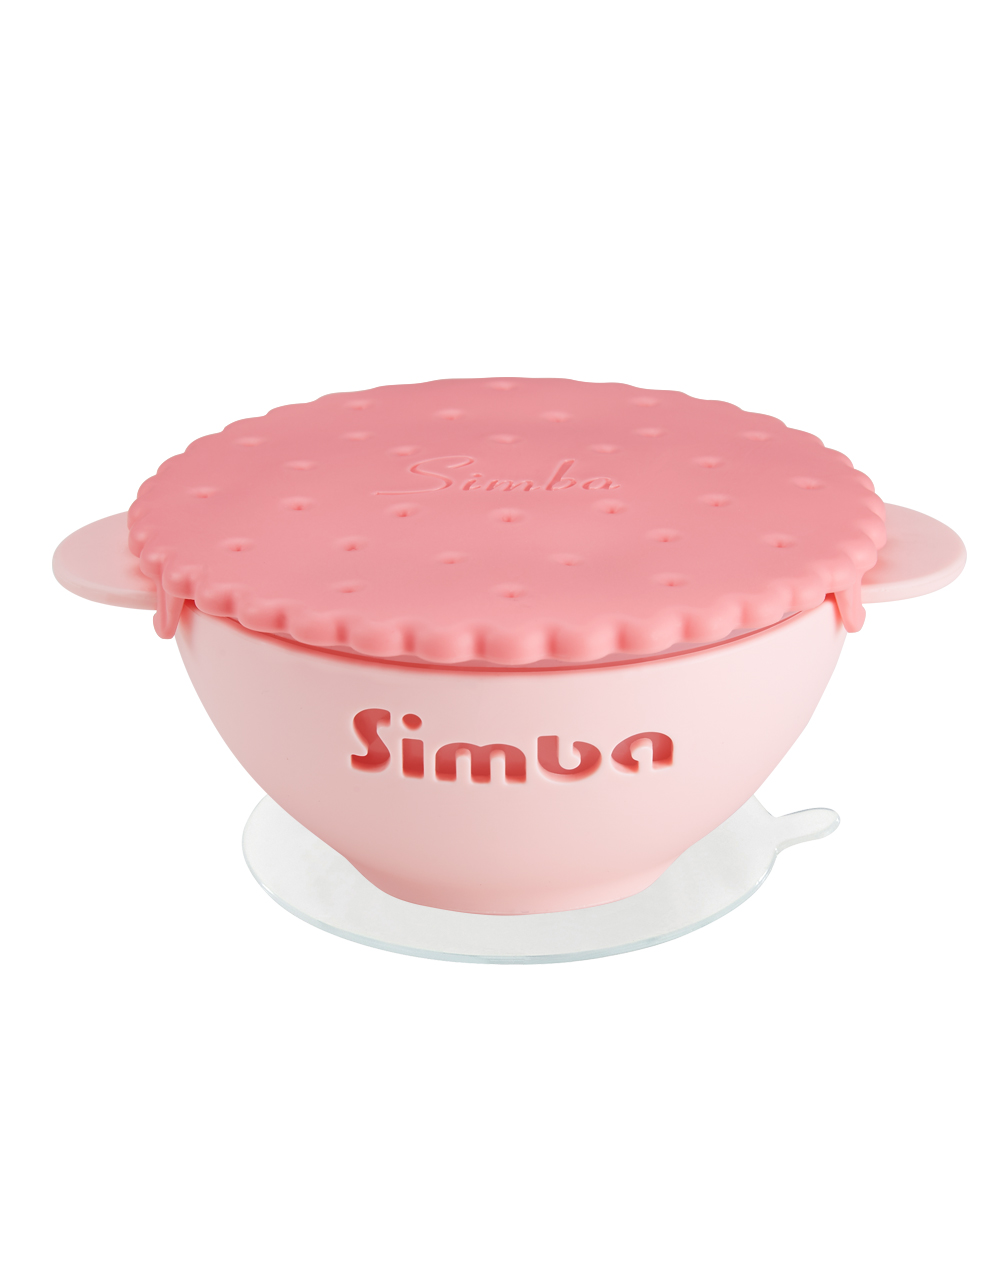 Simba Silicone Suction Bowl - Raspberry